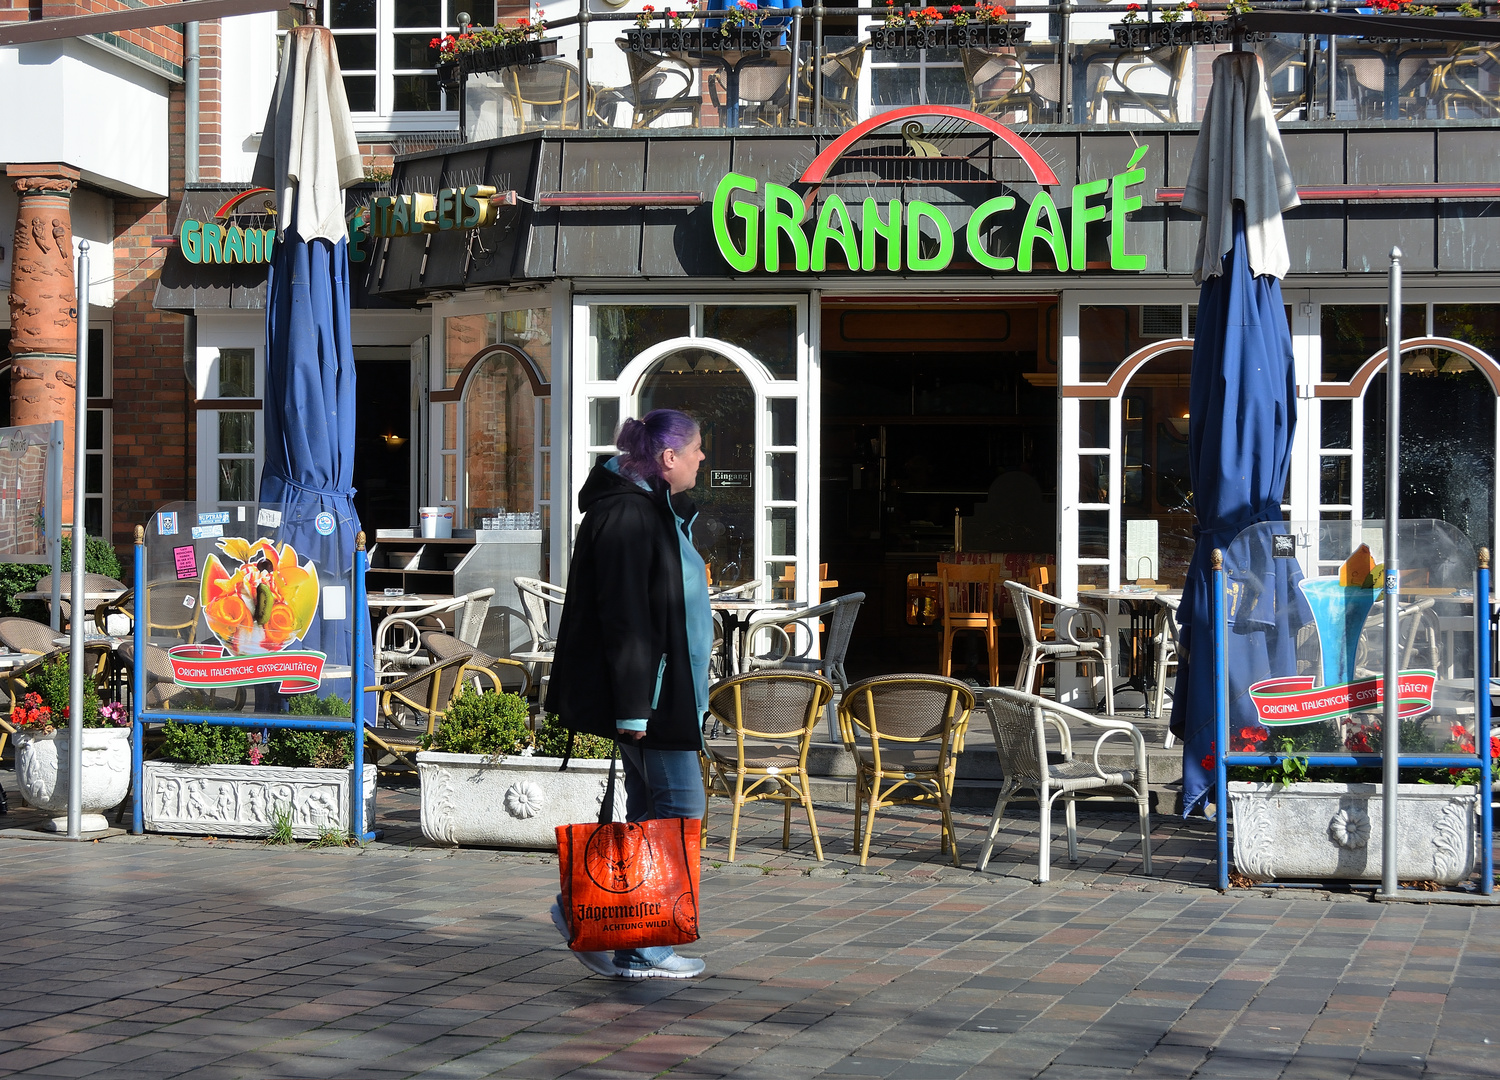 Kröpeliner Str. - Grand Cafe